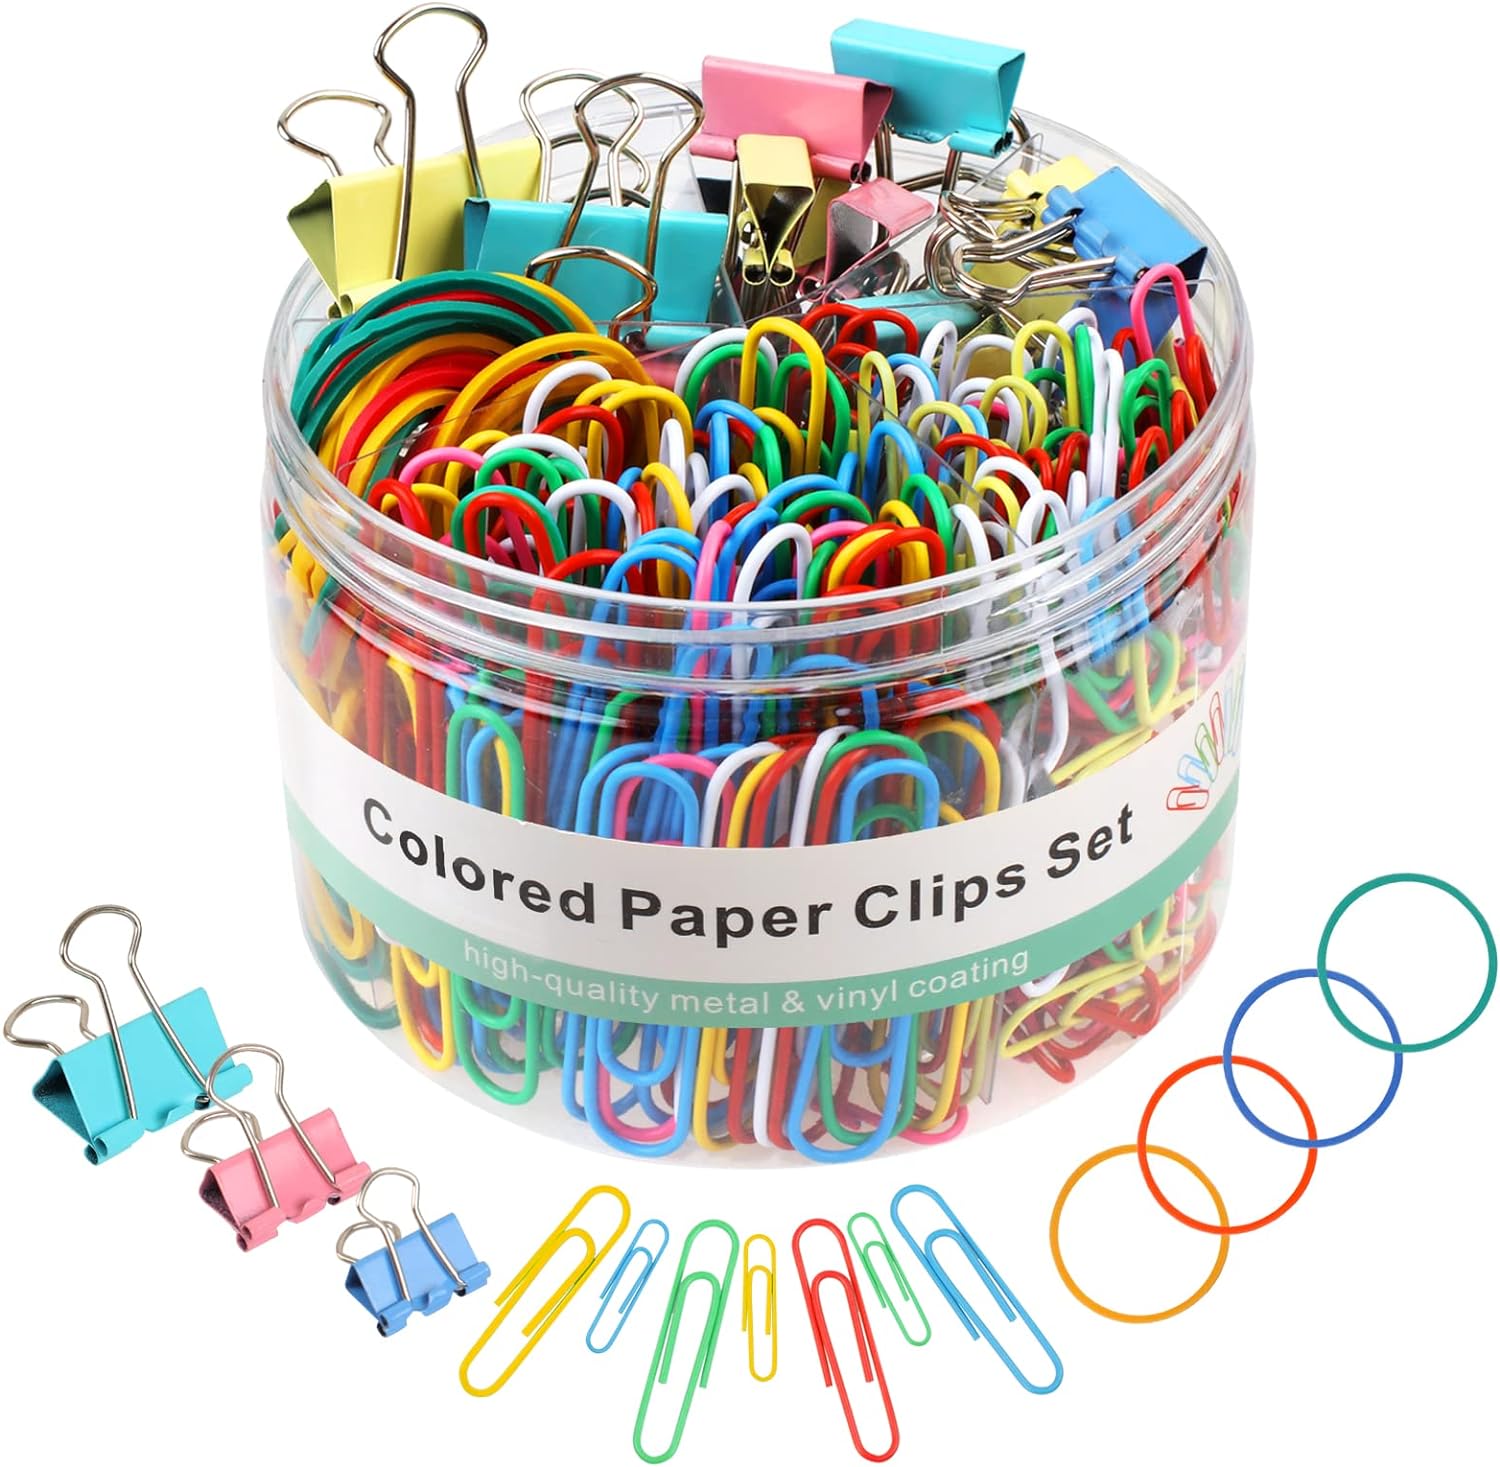 20 Amazon Classroom Items Every Teacher Needs for Under $10

classroom, teacher, teacher essentials, teacher gadgets, classroom essentials, paperclip, clips set